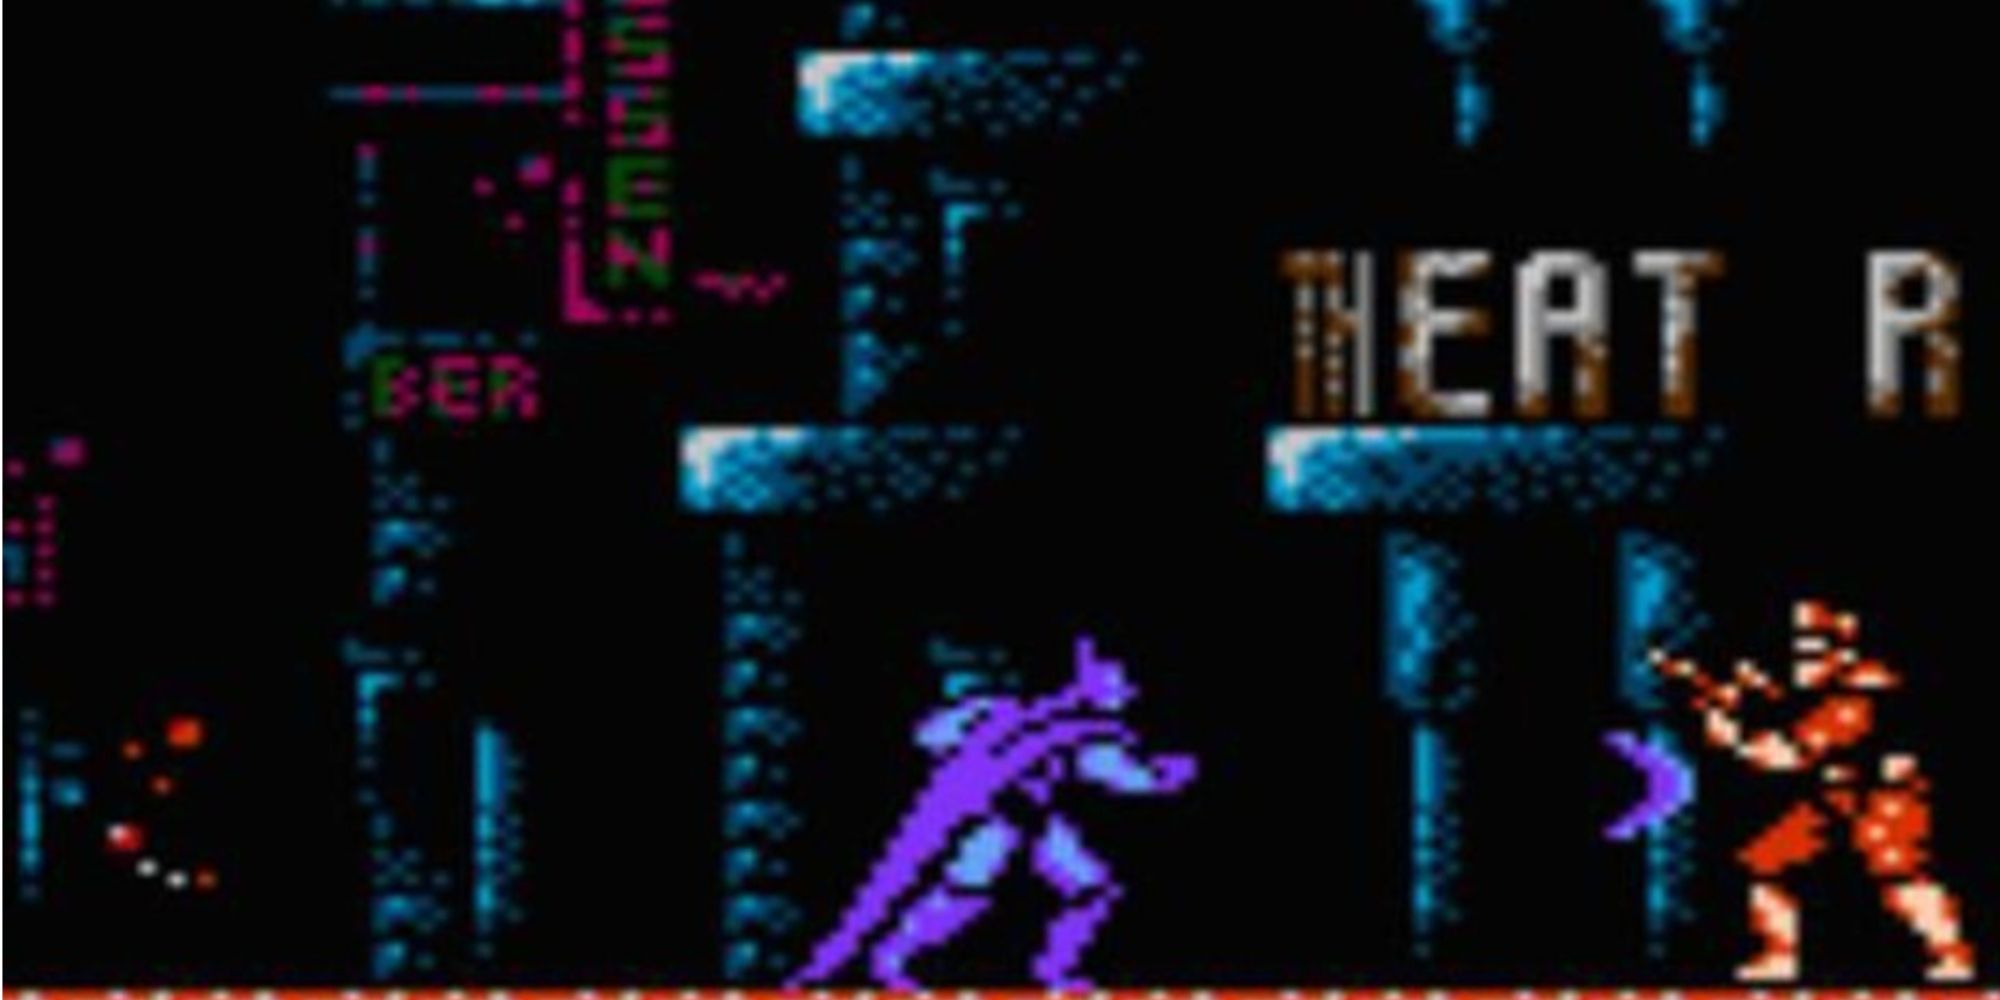 a screenshot of the Batman 1989 game featuring Batman in battle